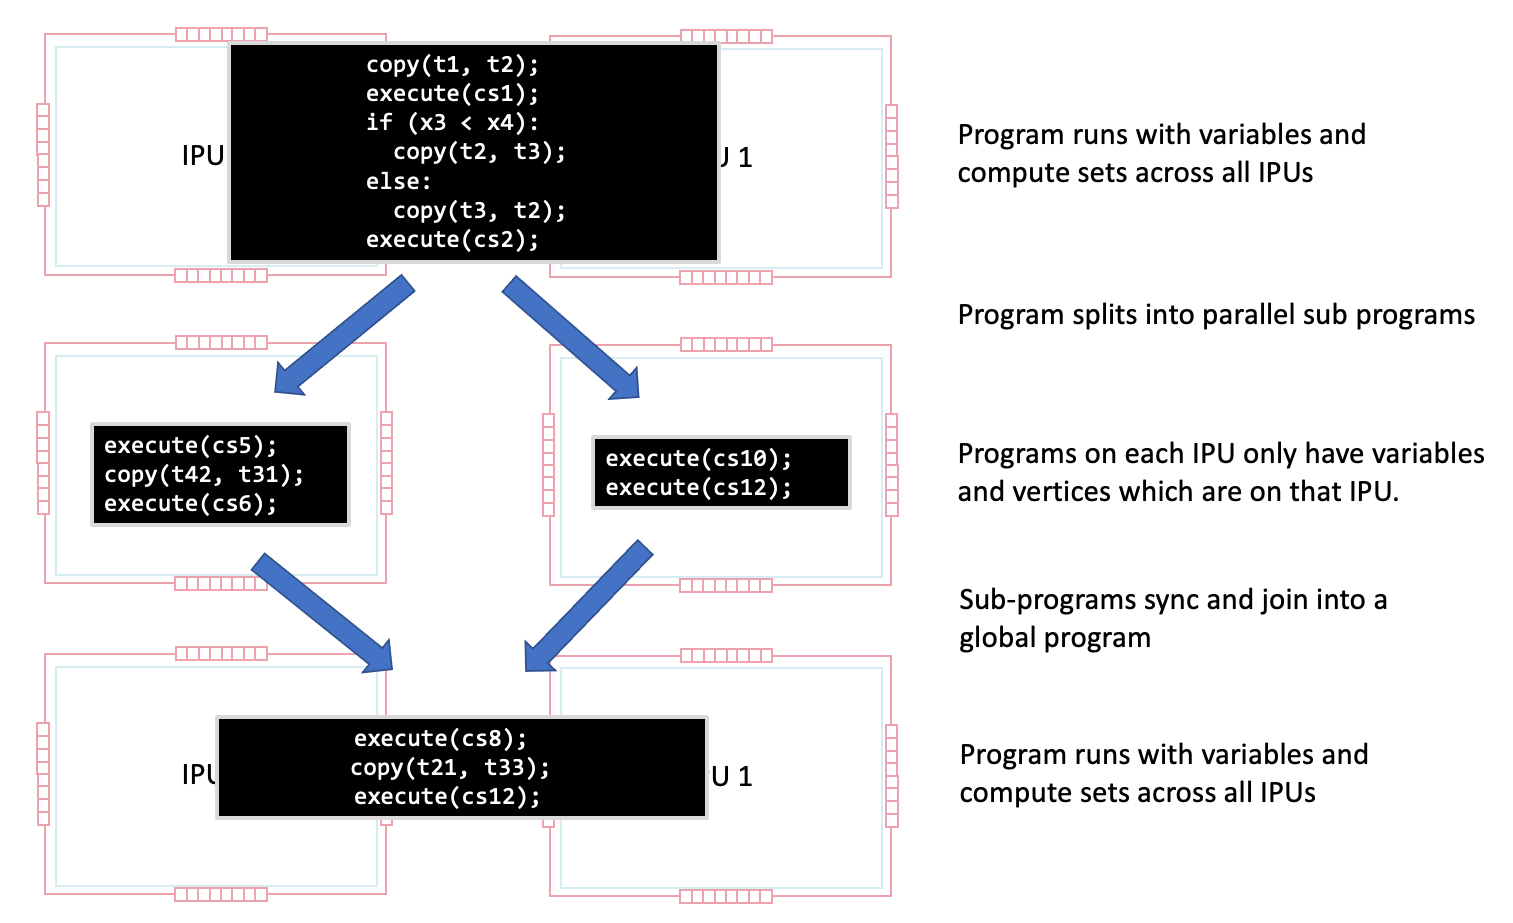 A program splitting into parallel sub-programs